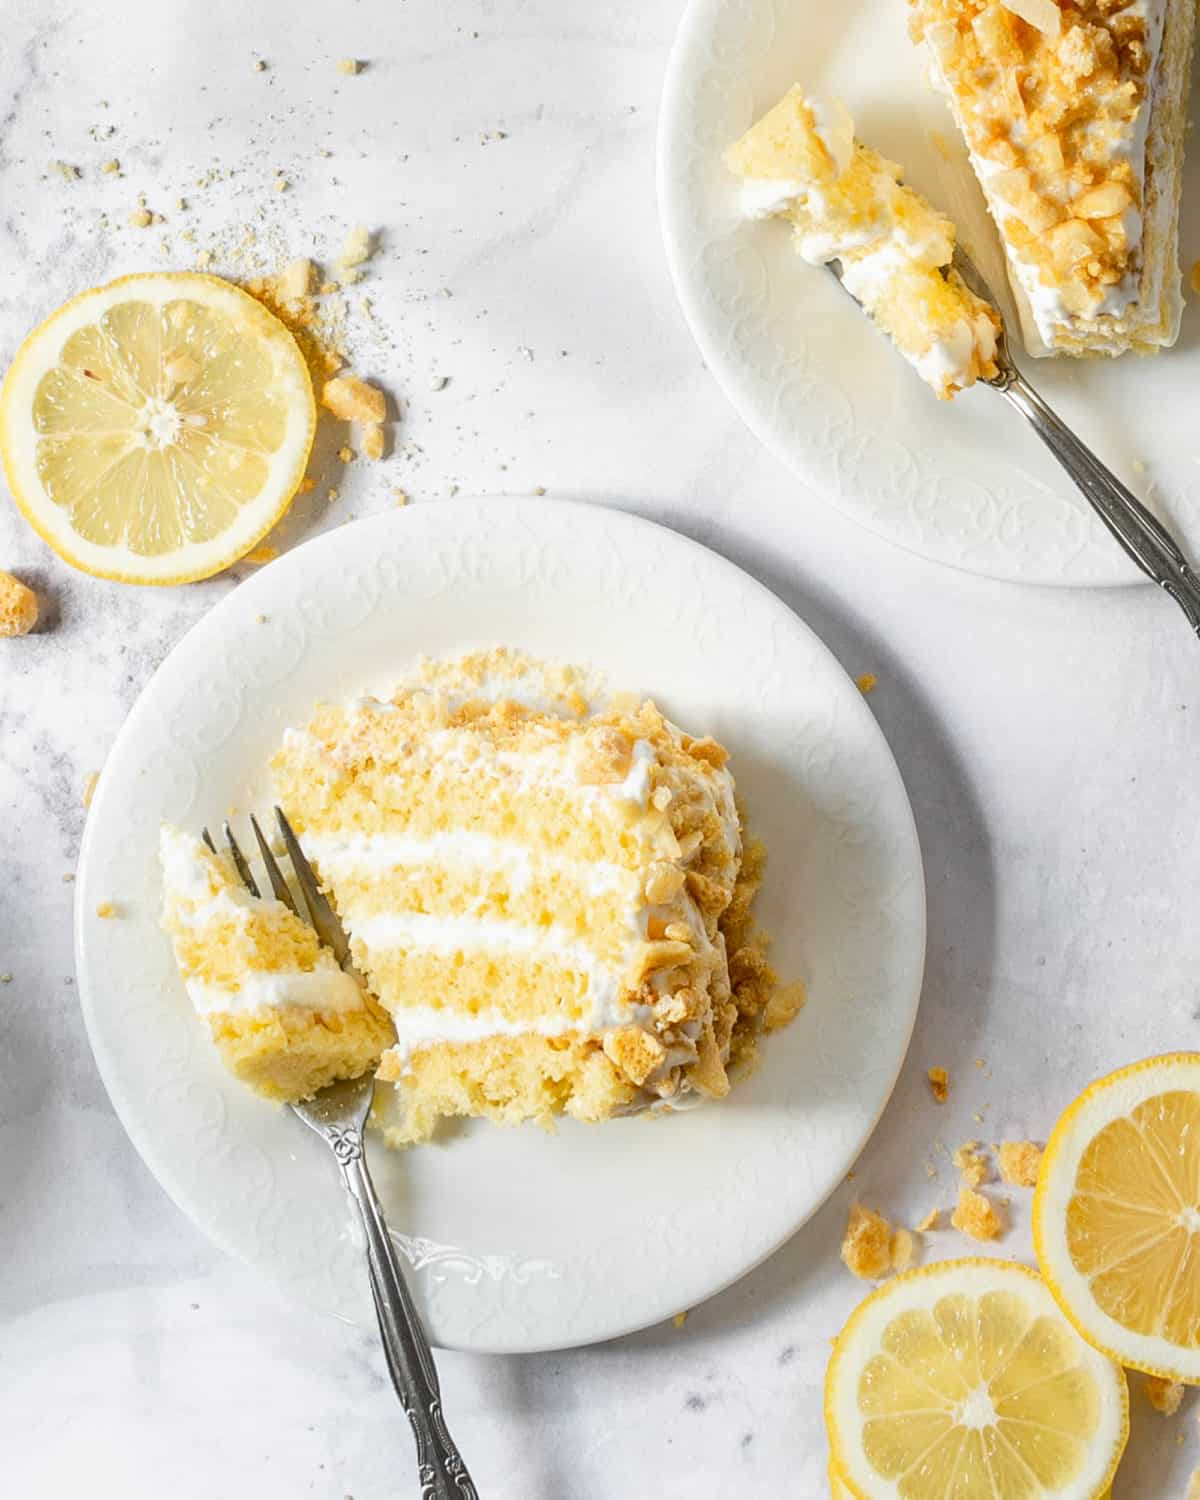 A slice of lemon crunch cake on a plate.